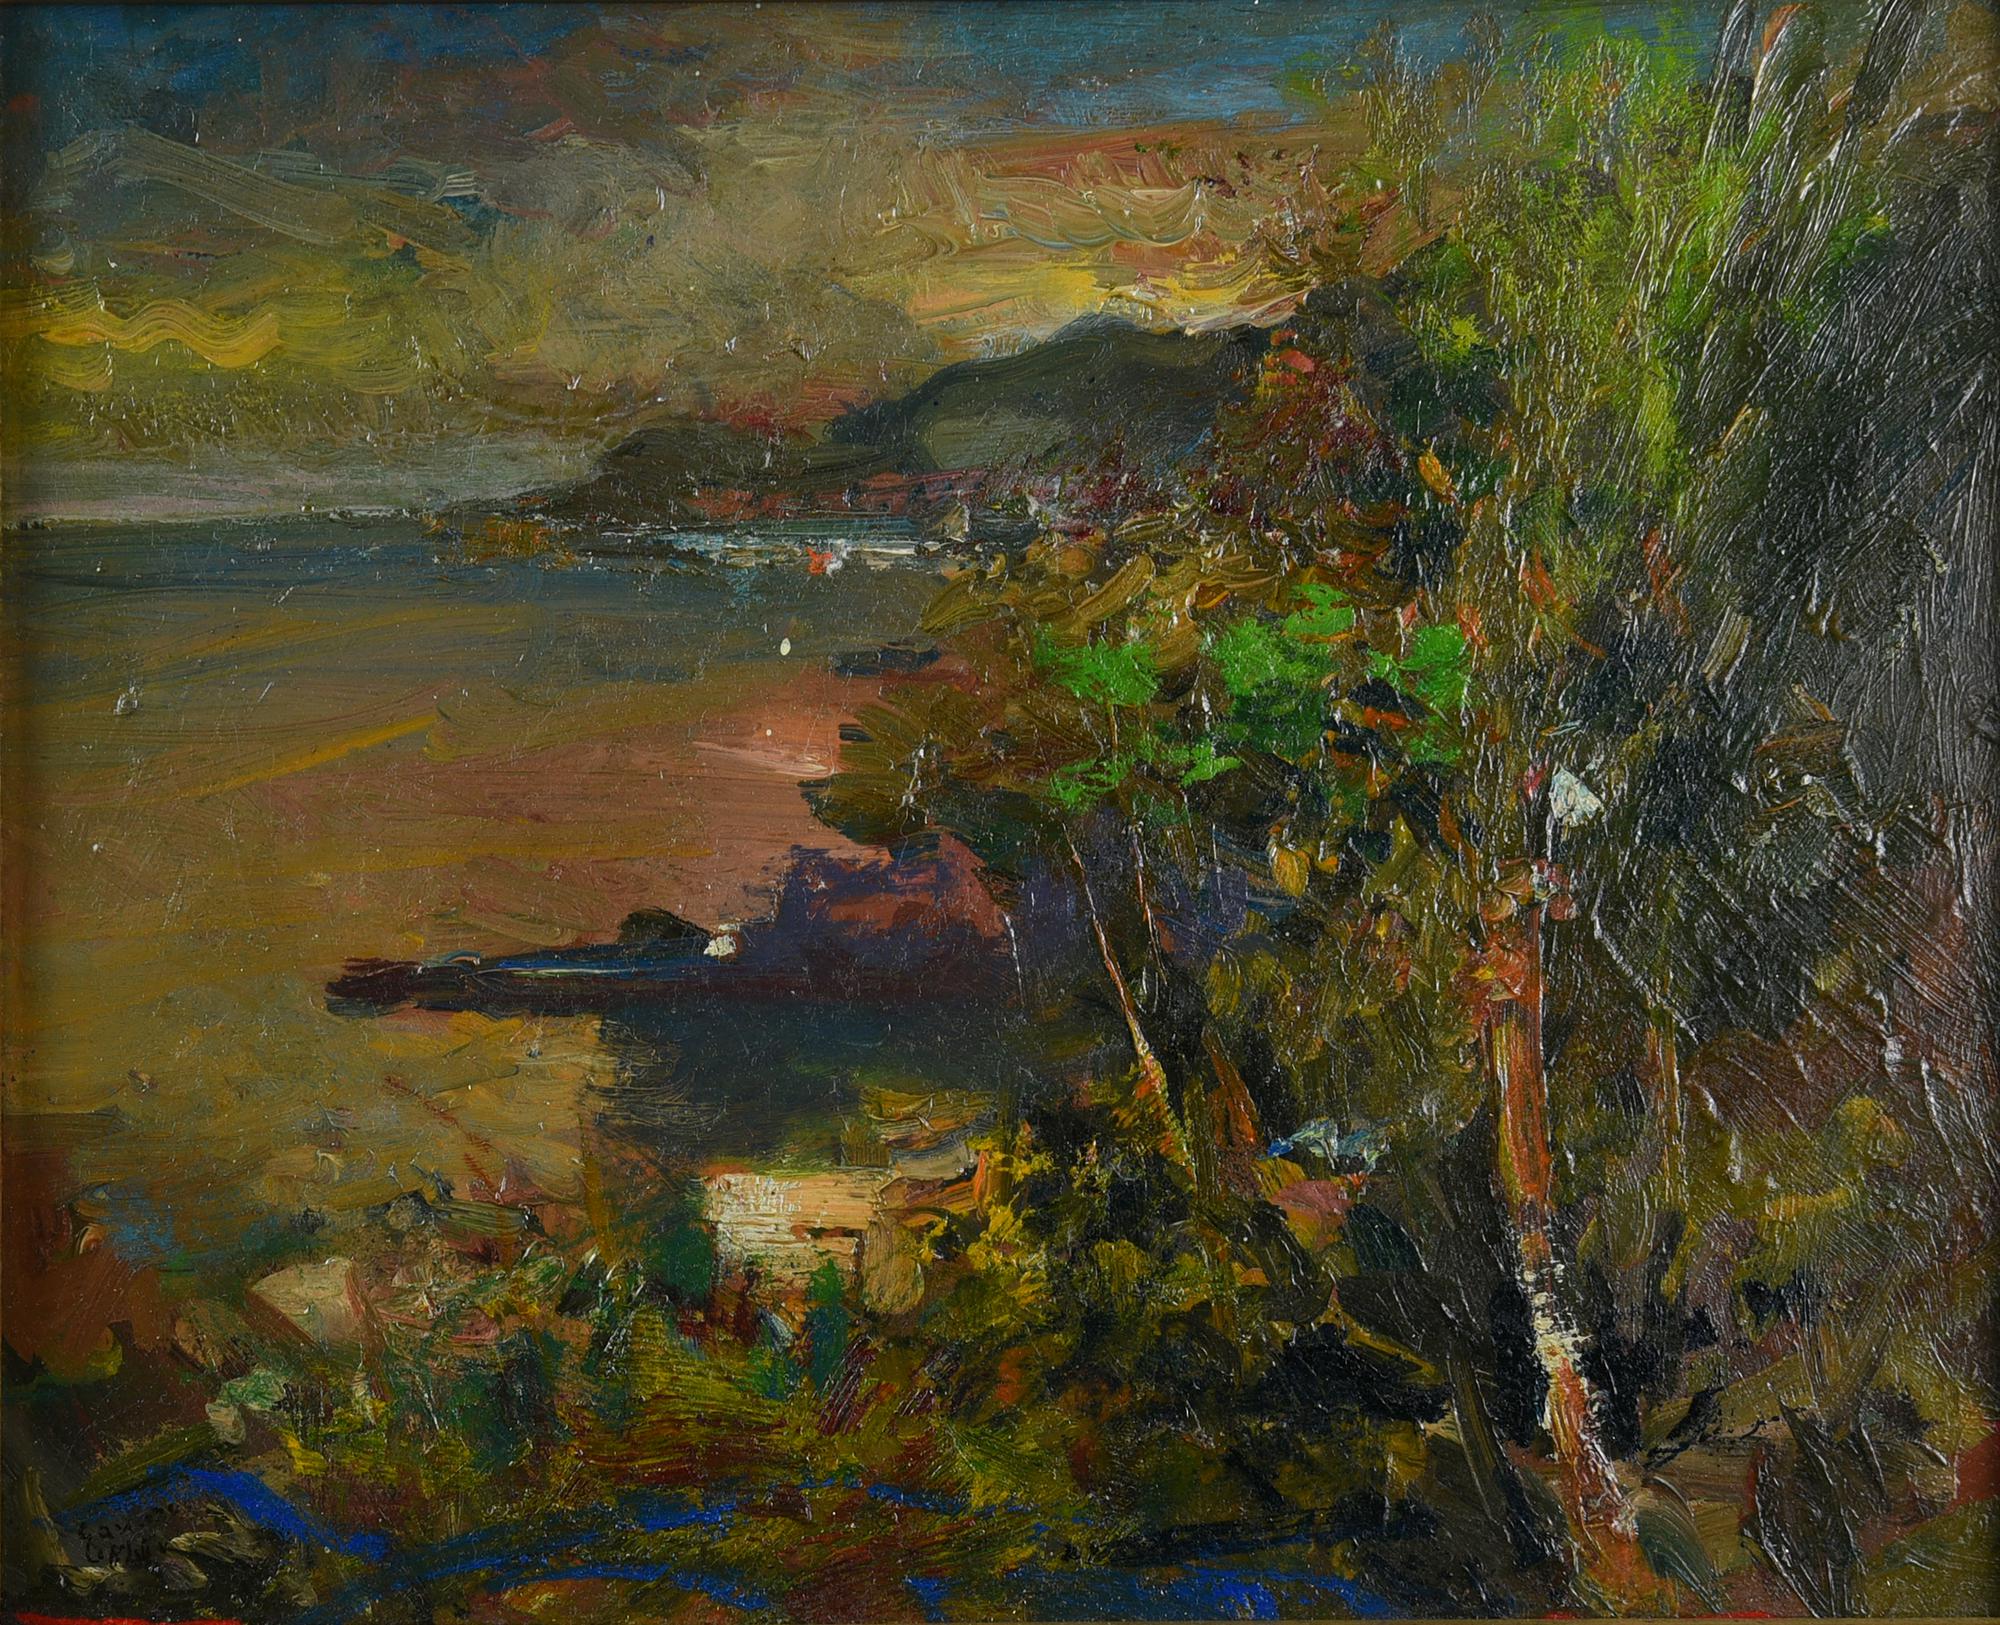 Giuseppe Casciaro PAESAGGIO olio su tavola, cm 26x31,5